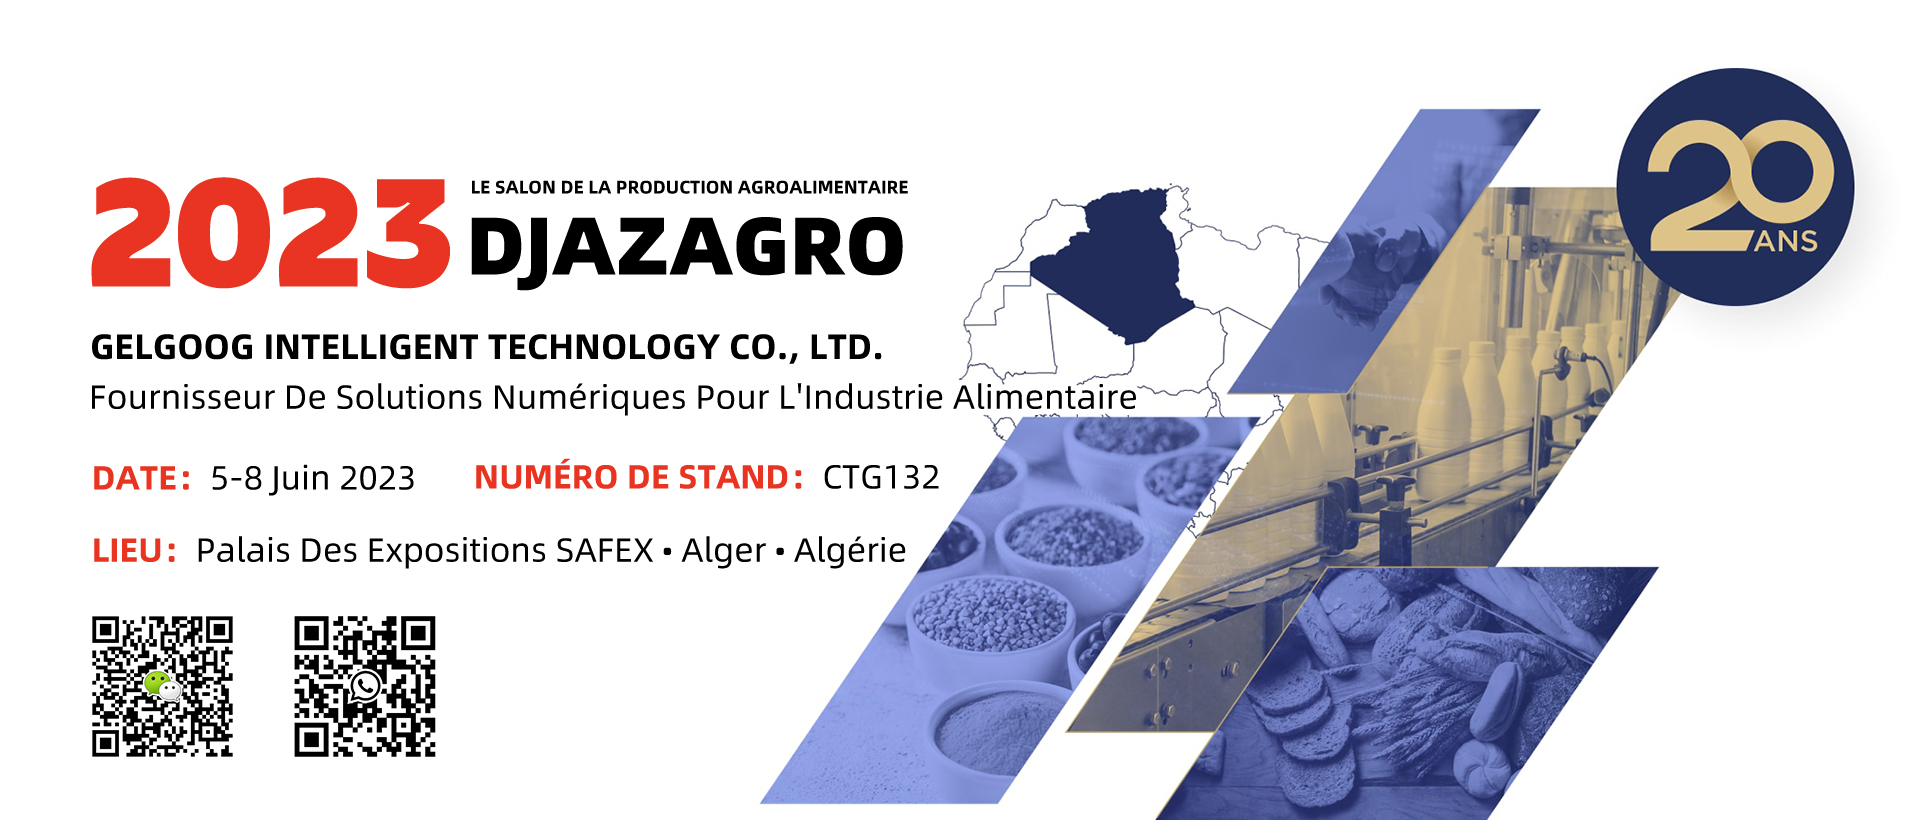 LE SALON DE LA PRODUCTION AGROALIMENTAIRE - DJAZAGRO - GELGOOG